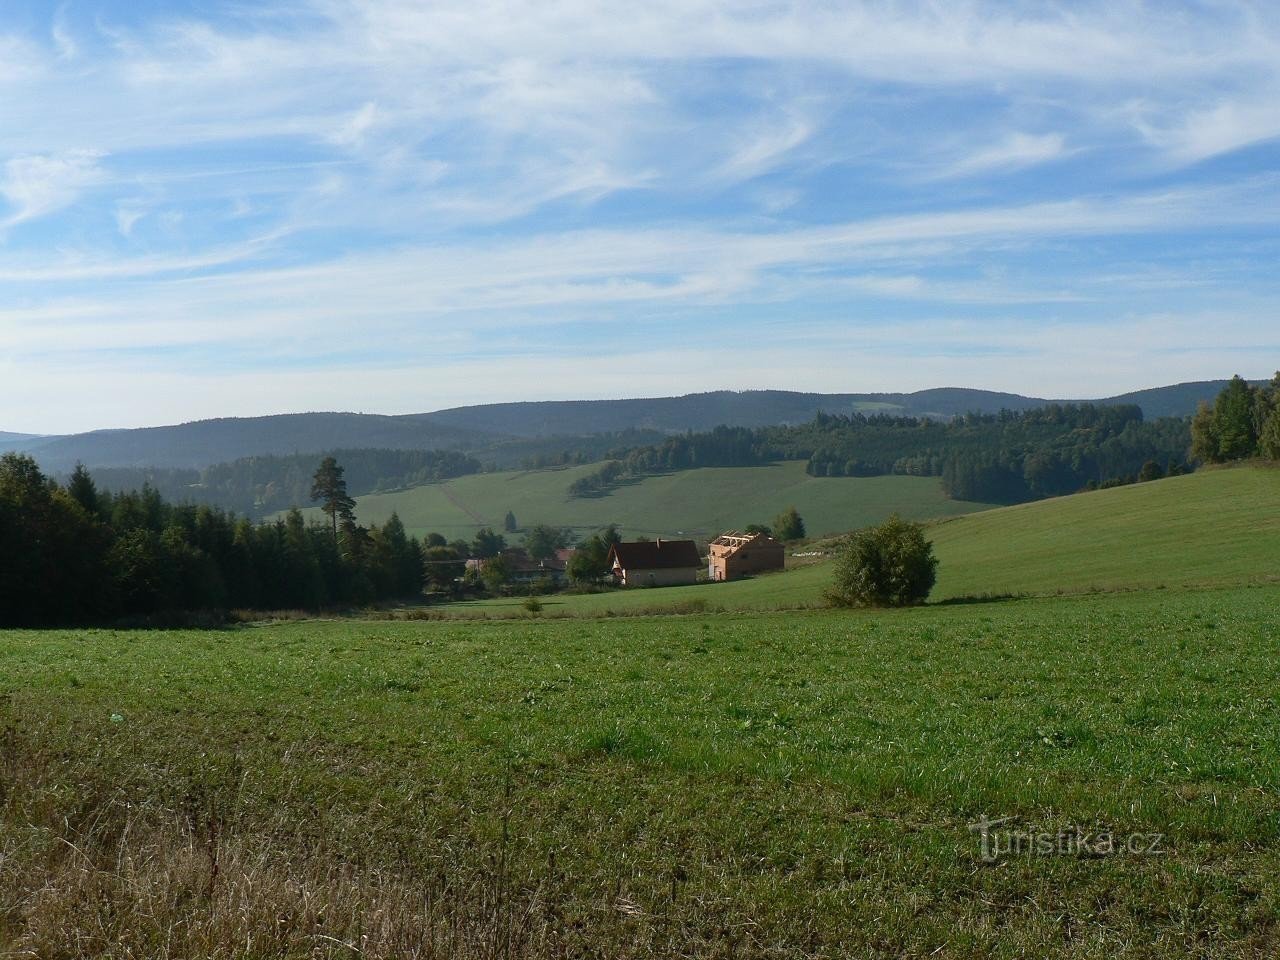 Libětice từ phía bắc, Šumava ở phía sau